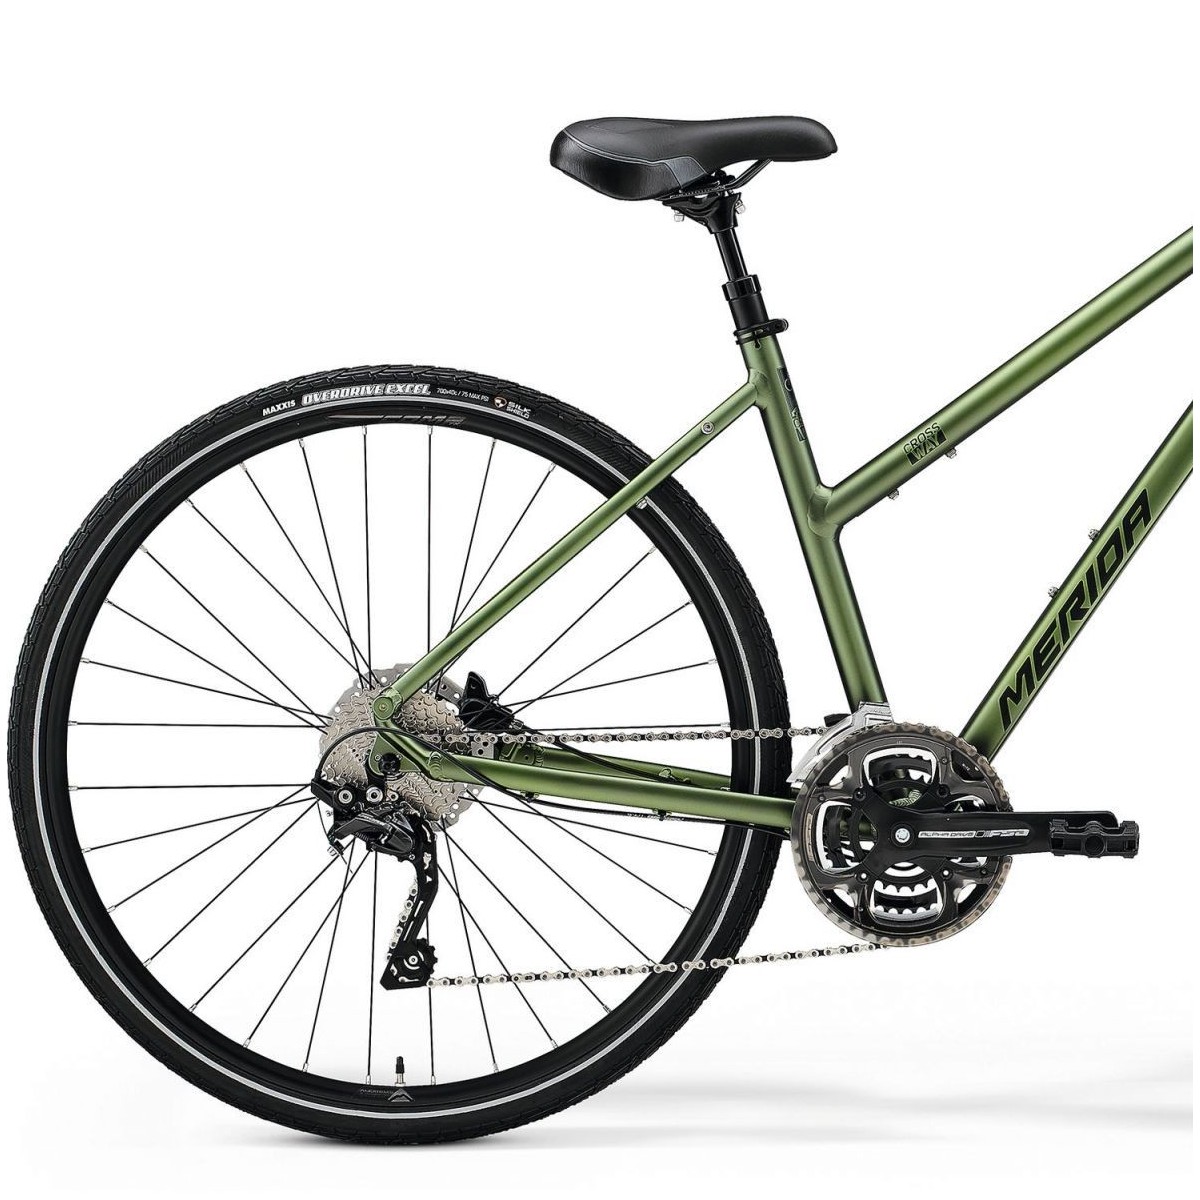 MERIDA CROSSWAY 300 LADY velosipēds - zaļš